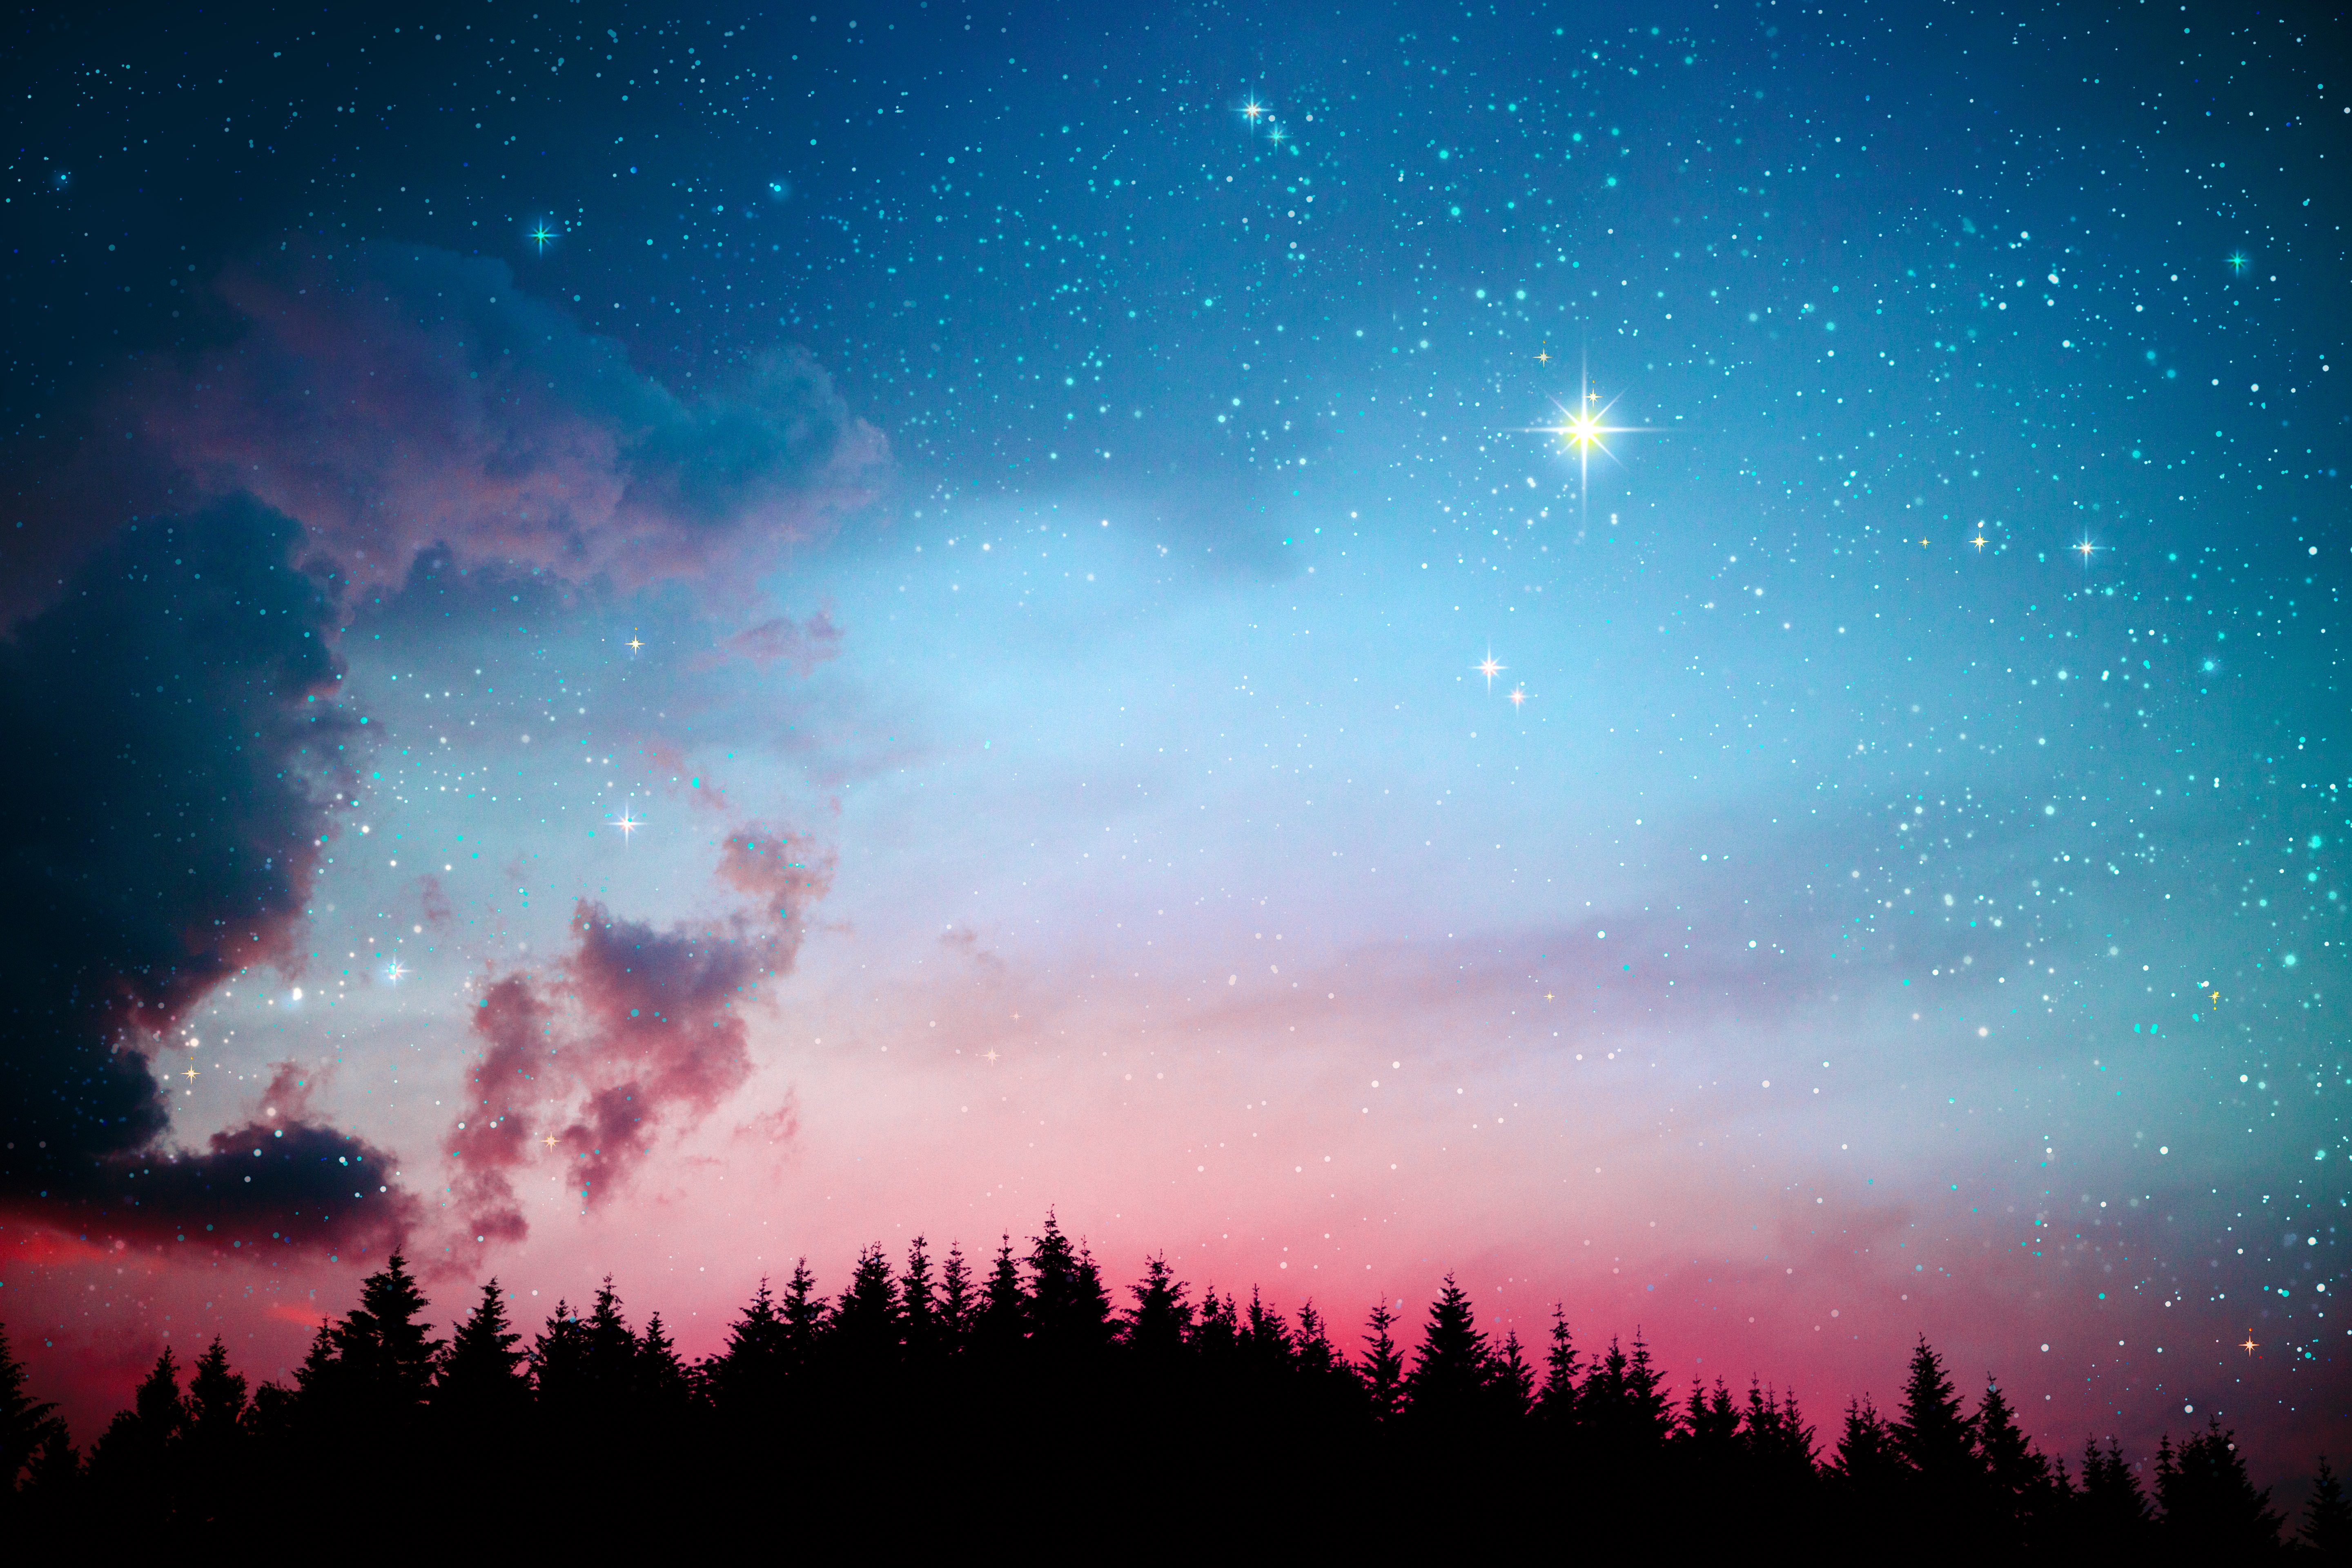 Sky Space Stars Galaxy Dark Lights Pink Night Forest Clouds Digital Art Artwork 5760x3840